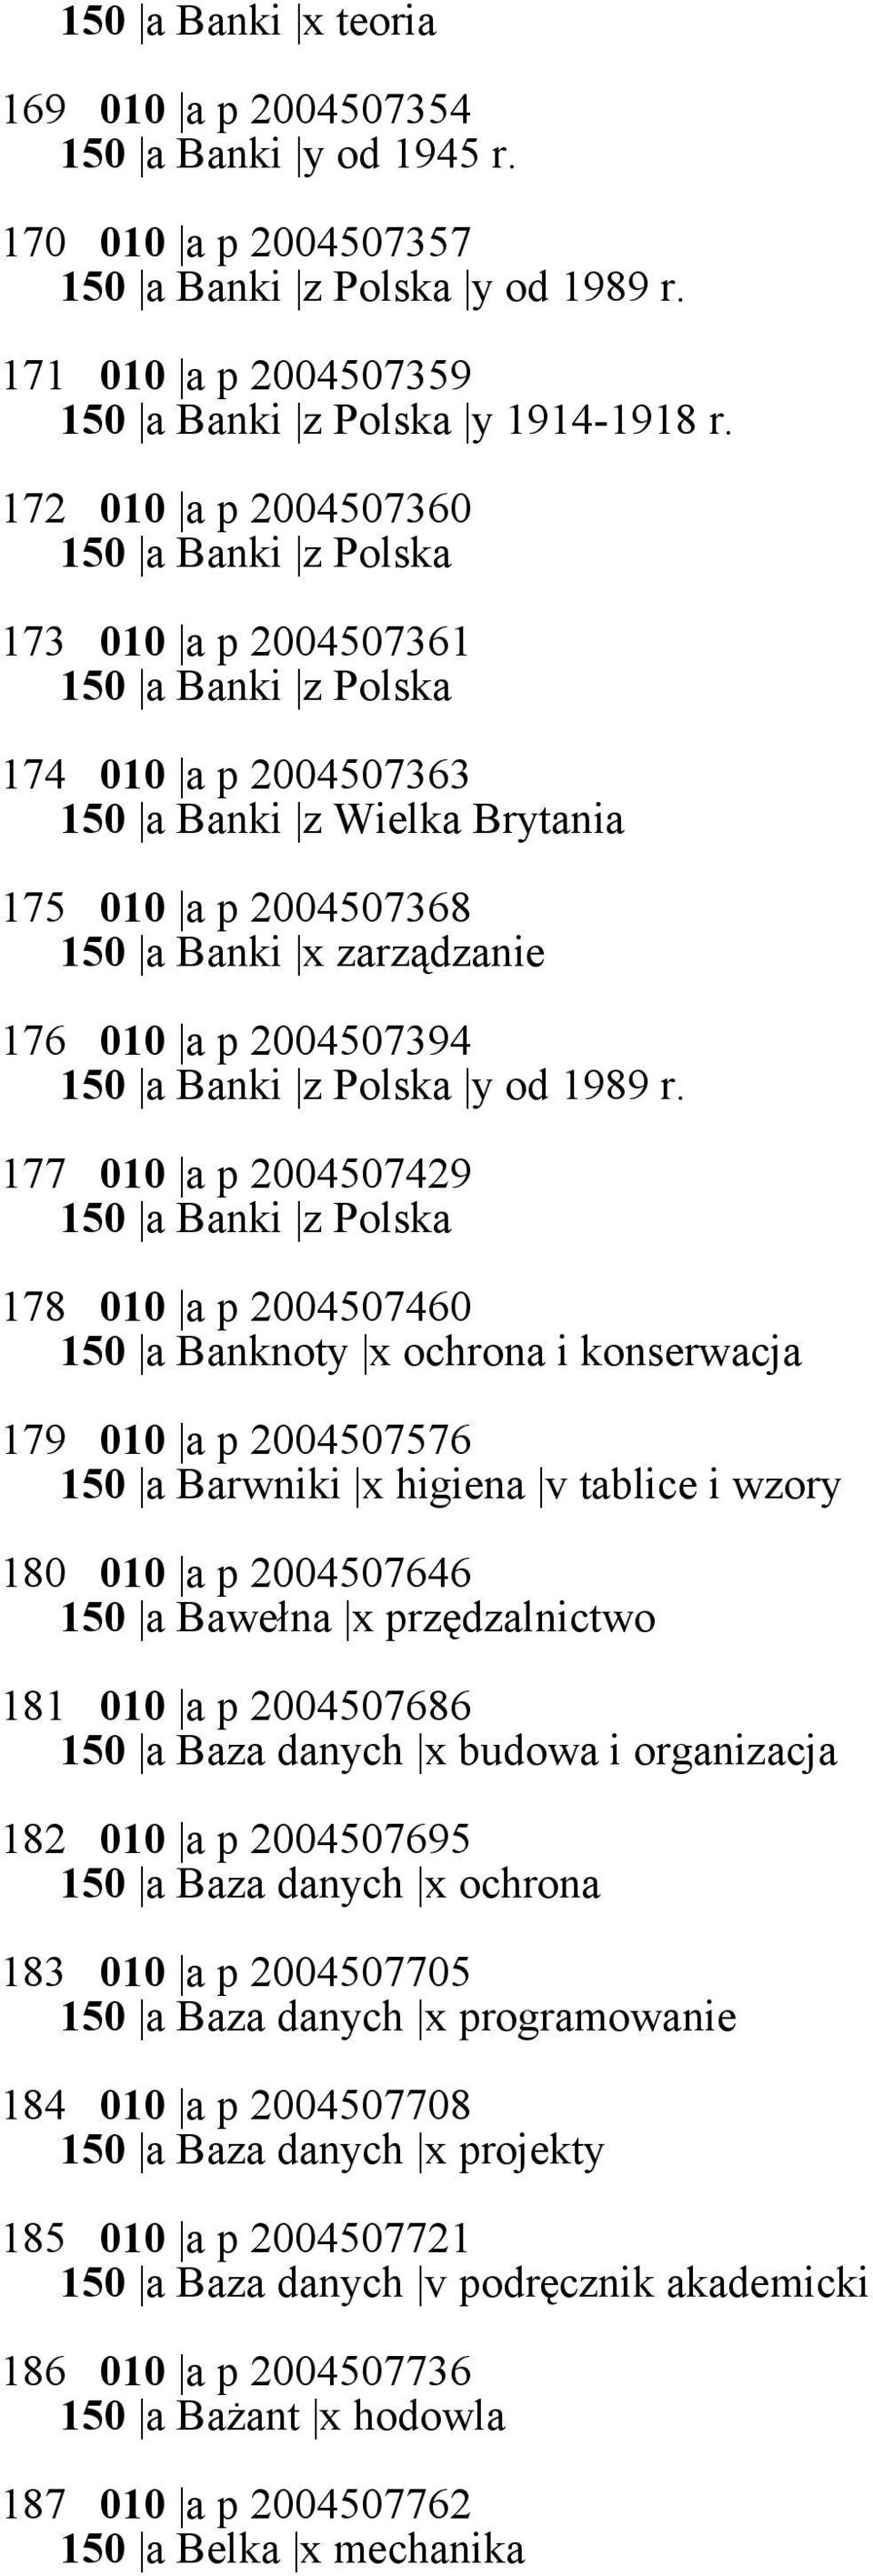 p 2004507394 150 a Banki z Polska y od 1989 r.